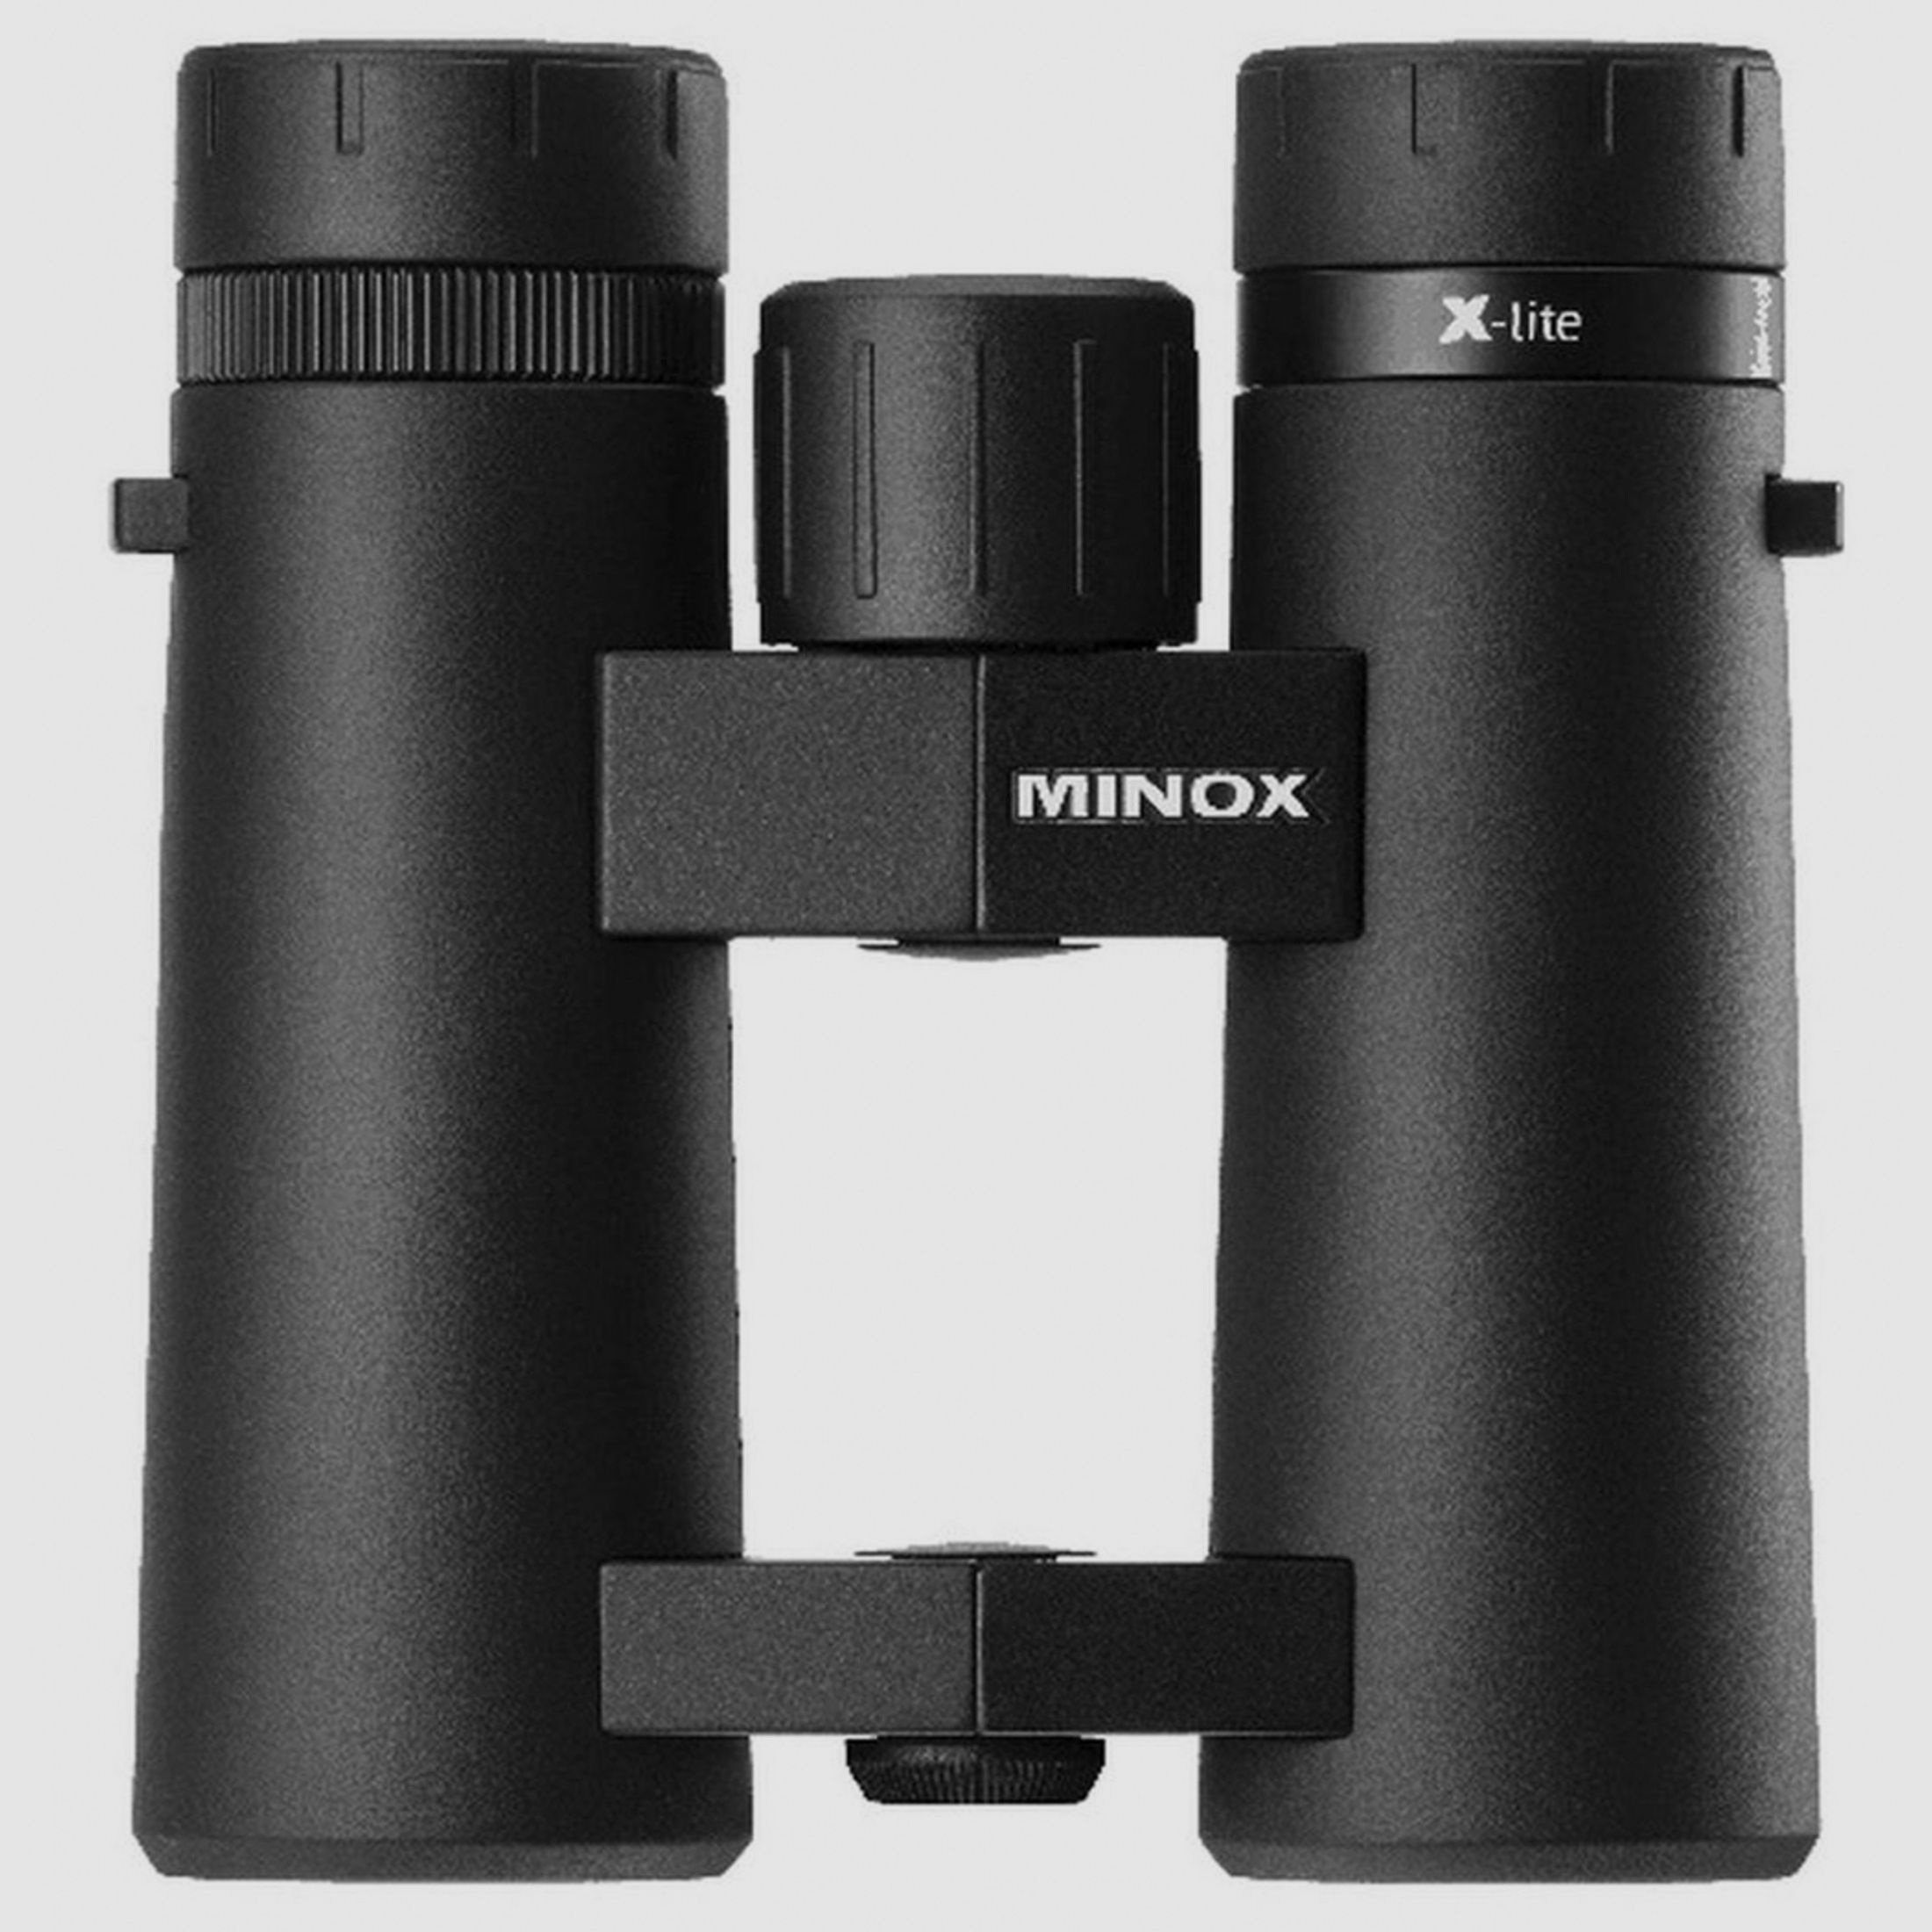 Minox Minox X-lite 10x26 -10,90€ 10% Fernglas Rabatt 98,10 Effektivpreis